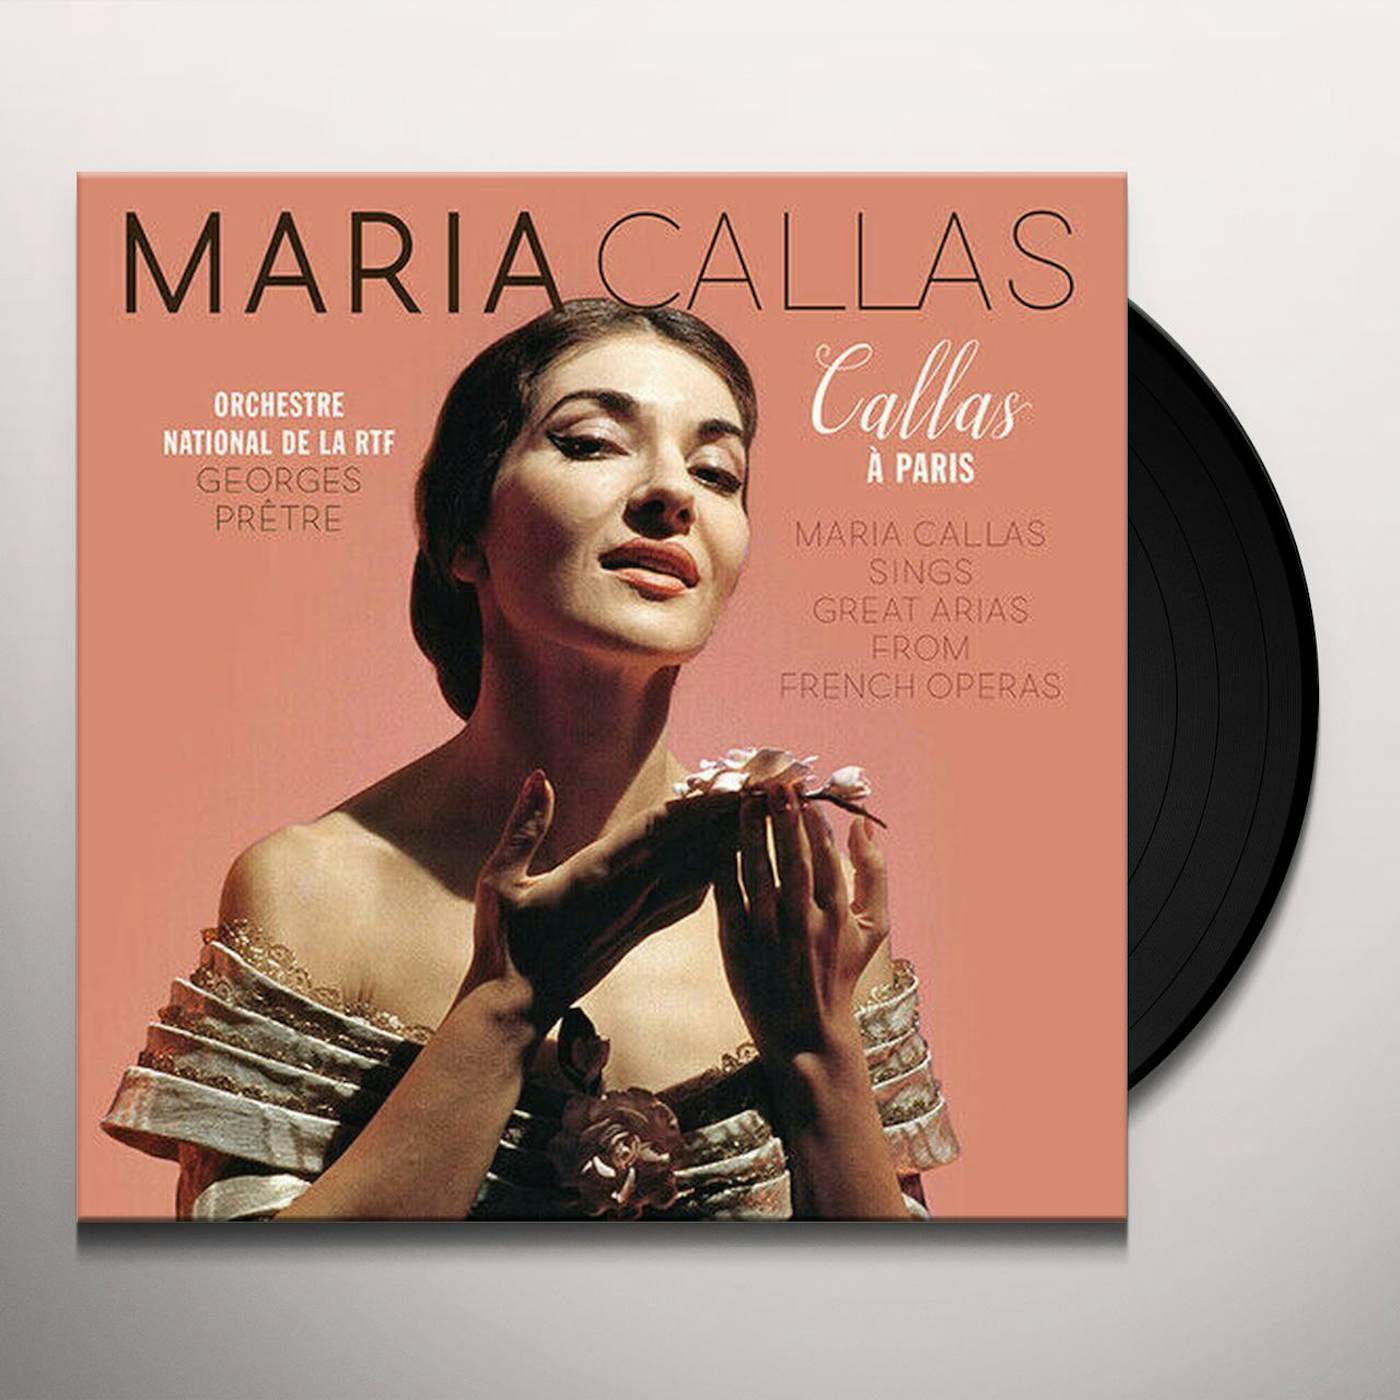 Maria Callas CALLAS A PARIS Vinyl Record